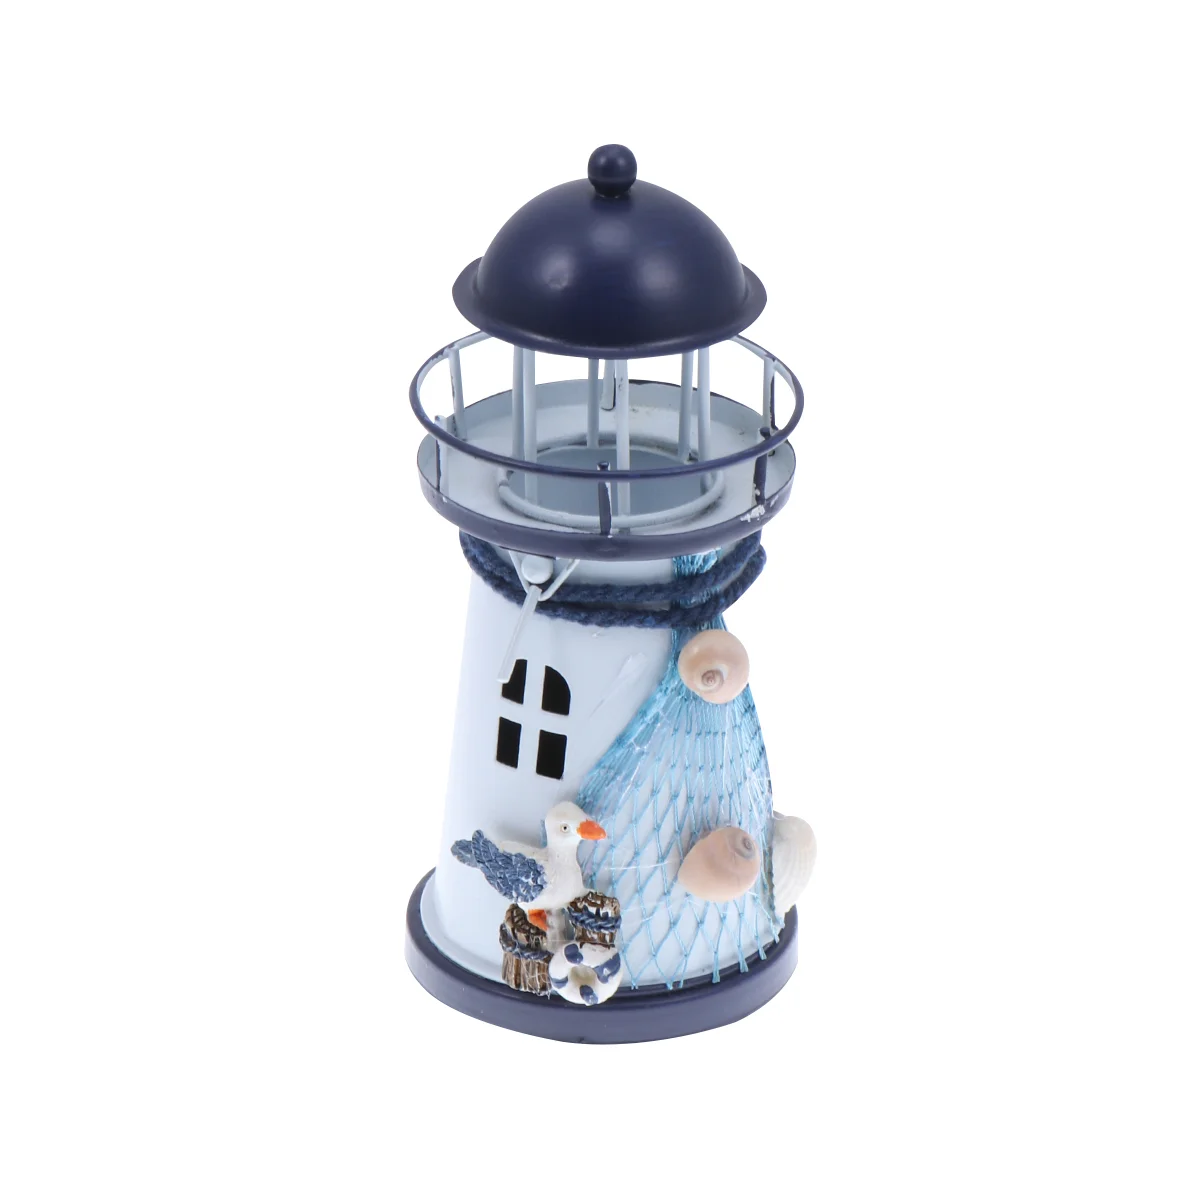 

Lighthouse Holder Candlestick Iron Holders Table Nautical Tealight Figurines Decorations Mediterranean Home Decor Beach